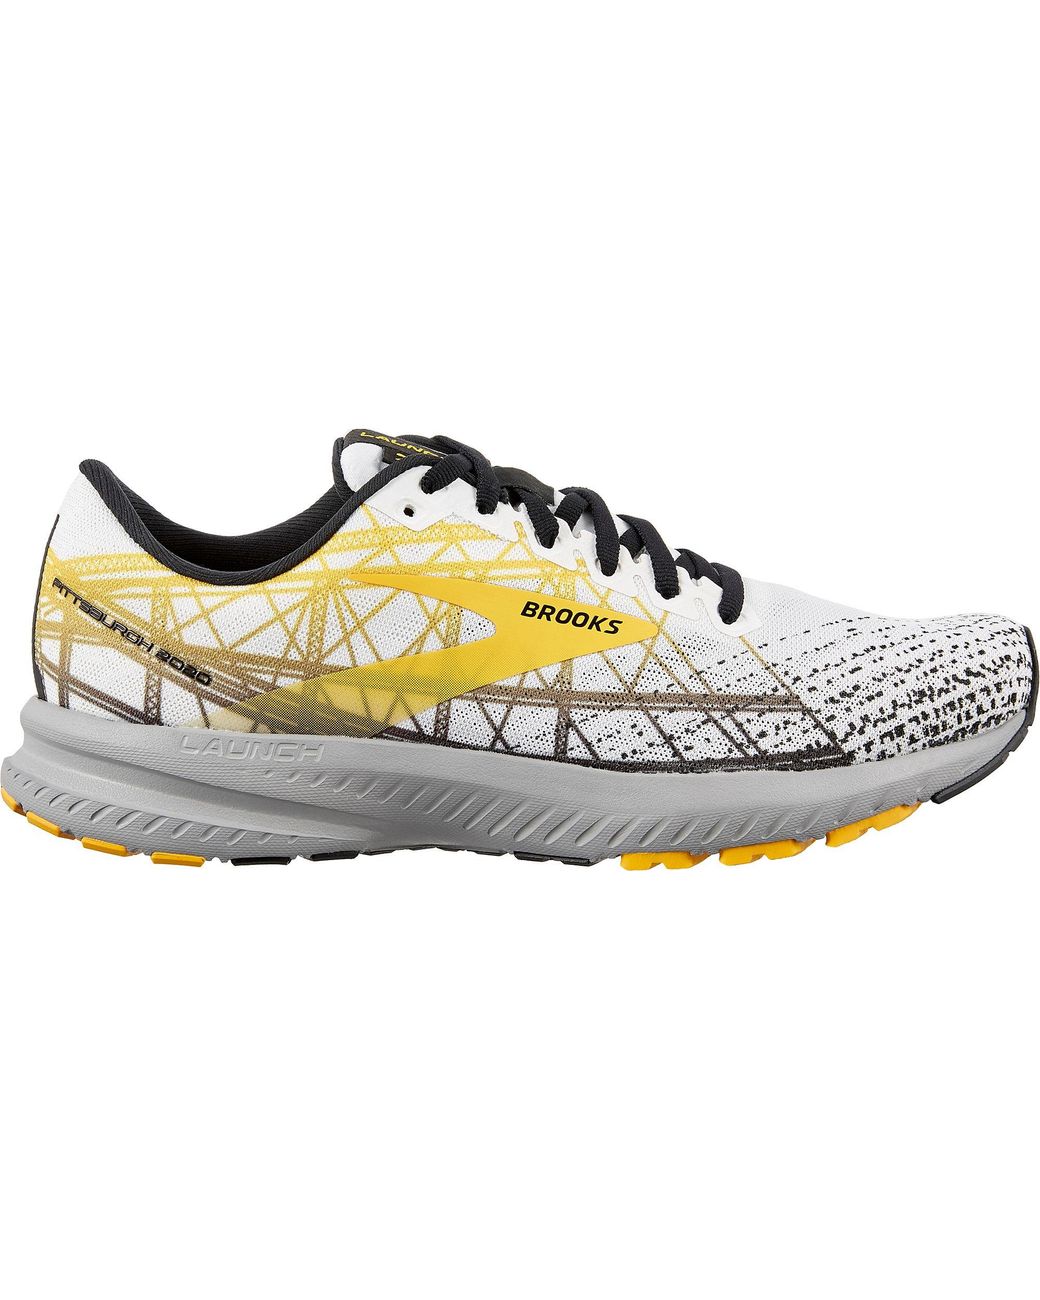 Brooks Rubber Launch 7 Pittsburgh Marathon Running Shoes - Lyst